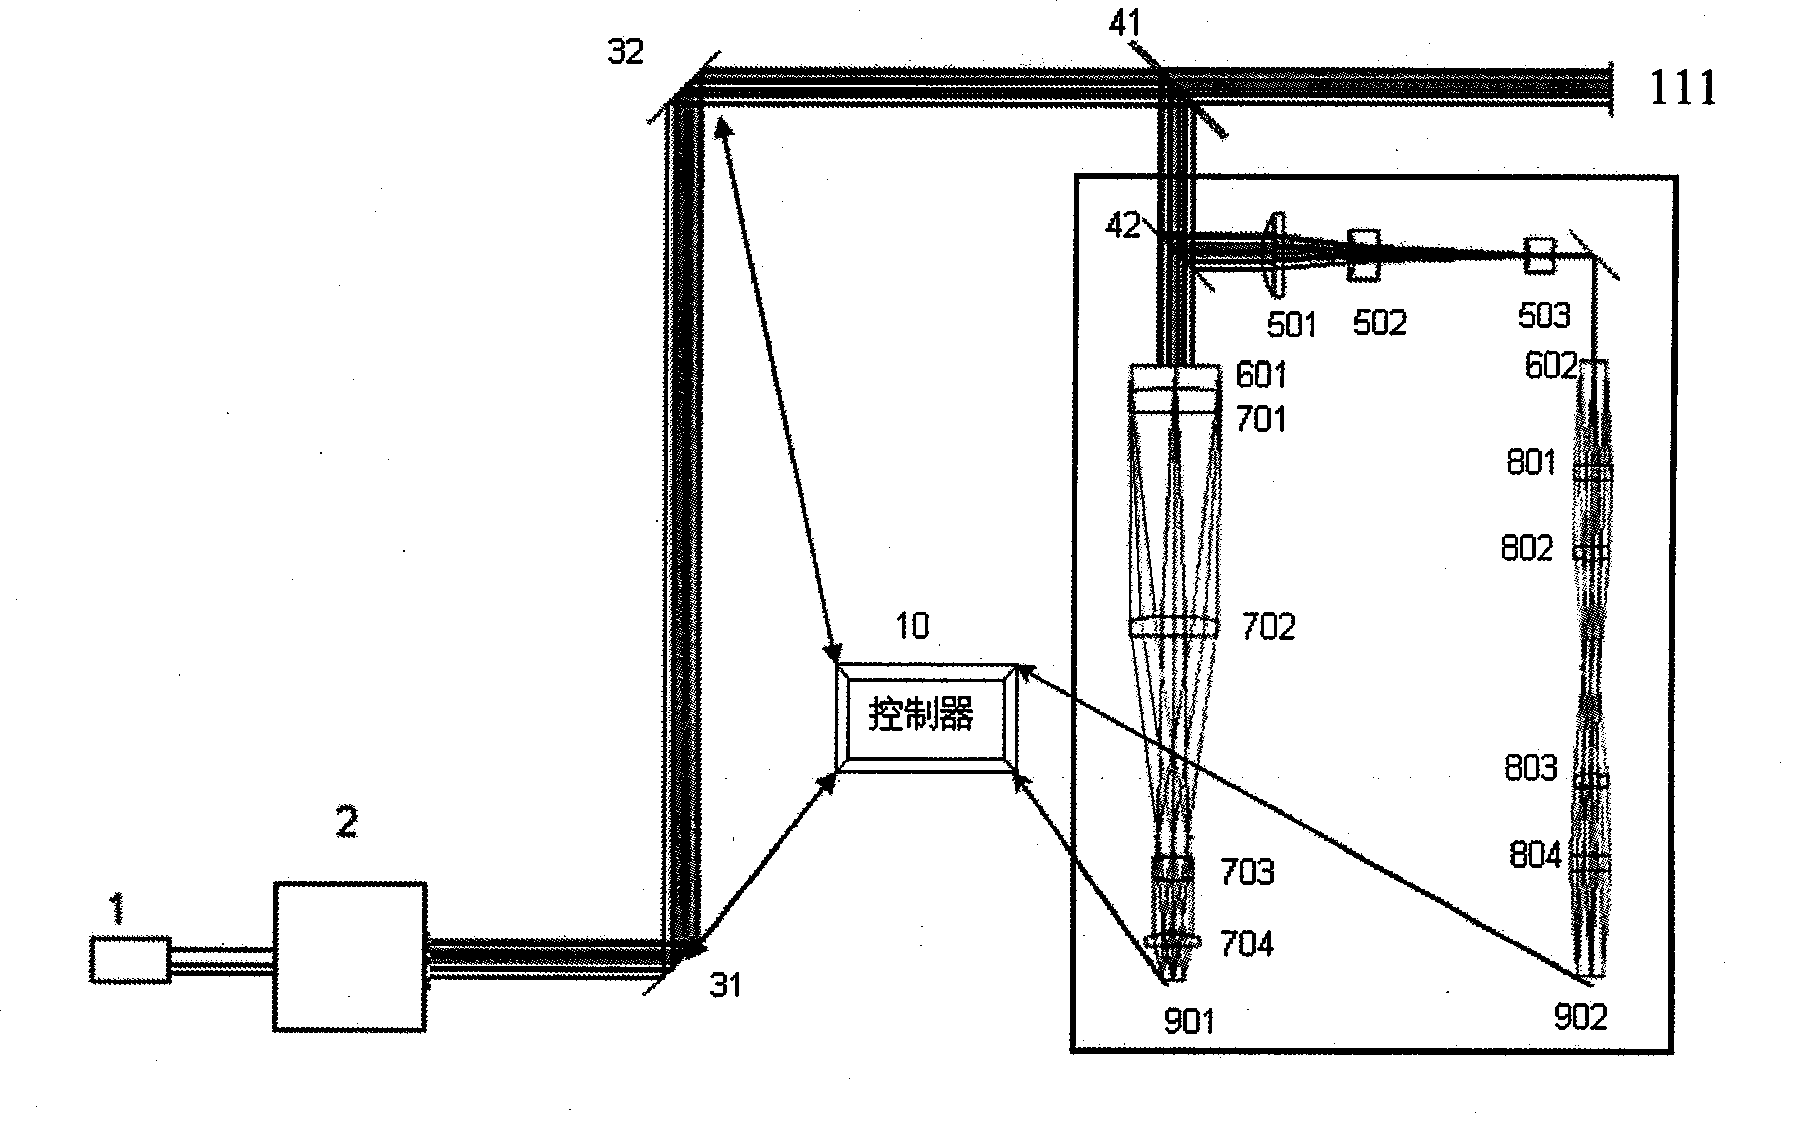 Light beam transmission apparatus and method